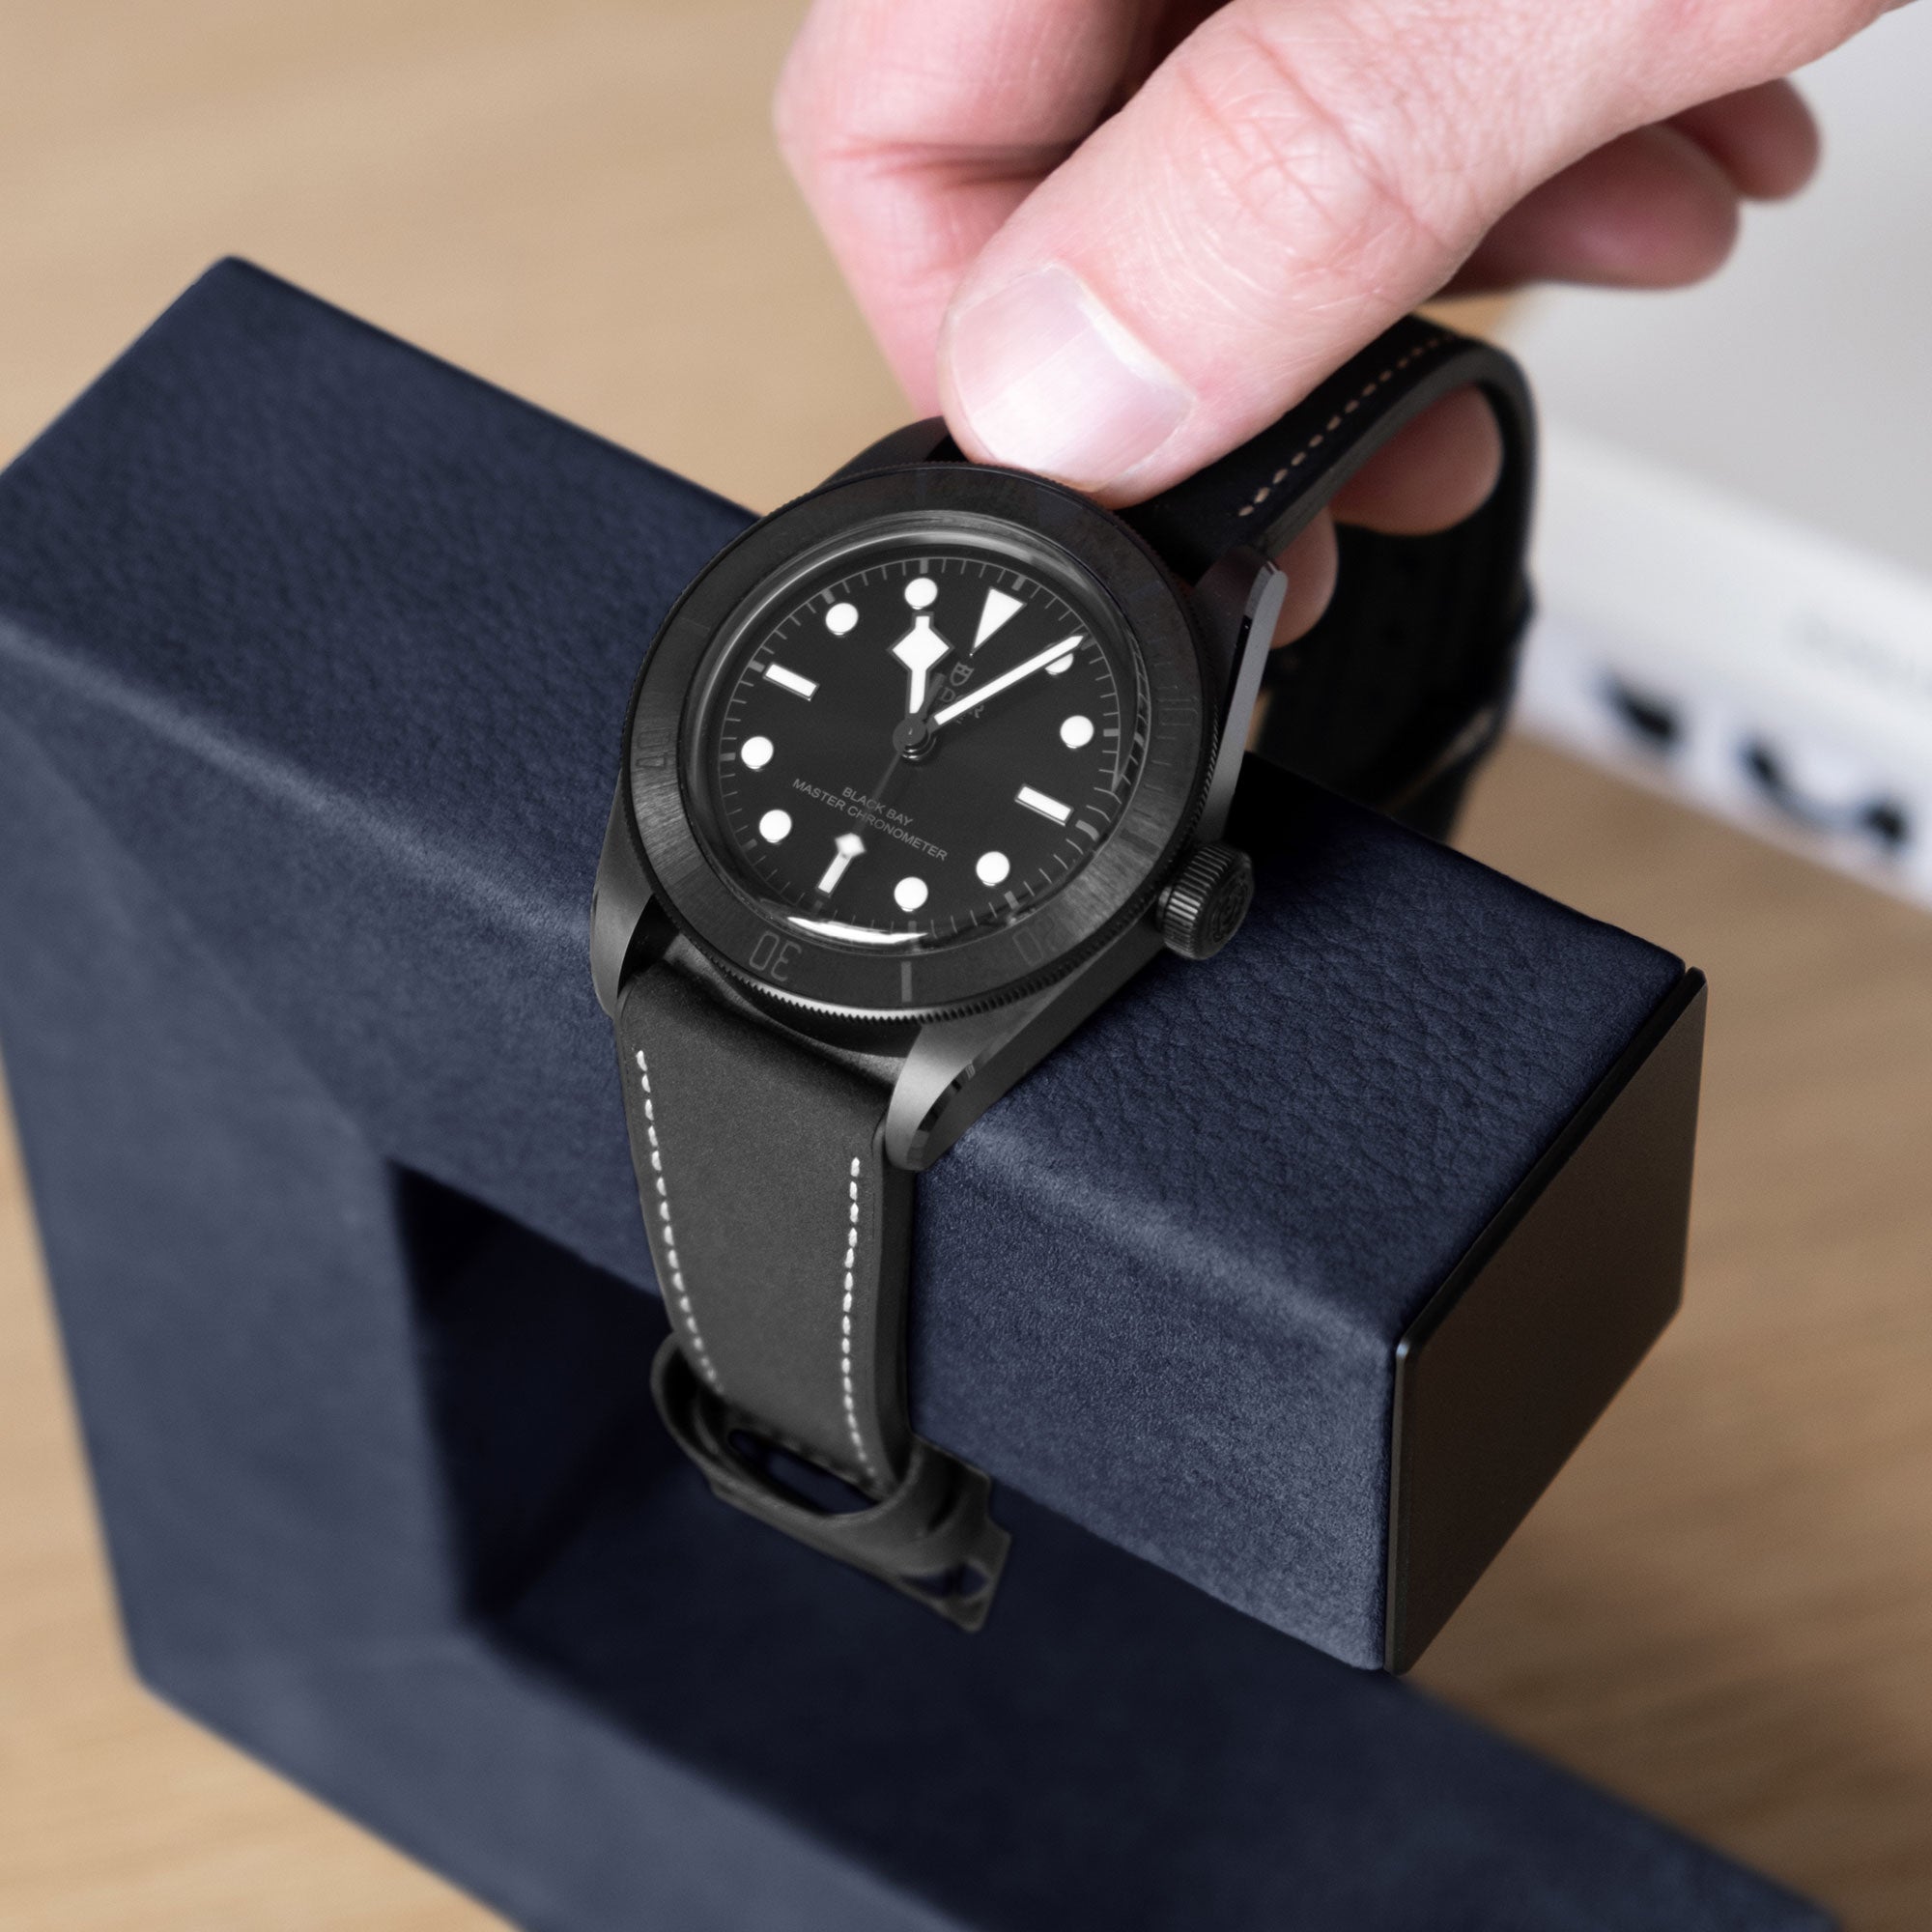 Luxury watch being taken from designer watch stand in navy nubuck leather